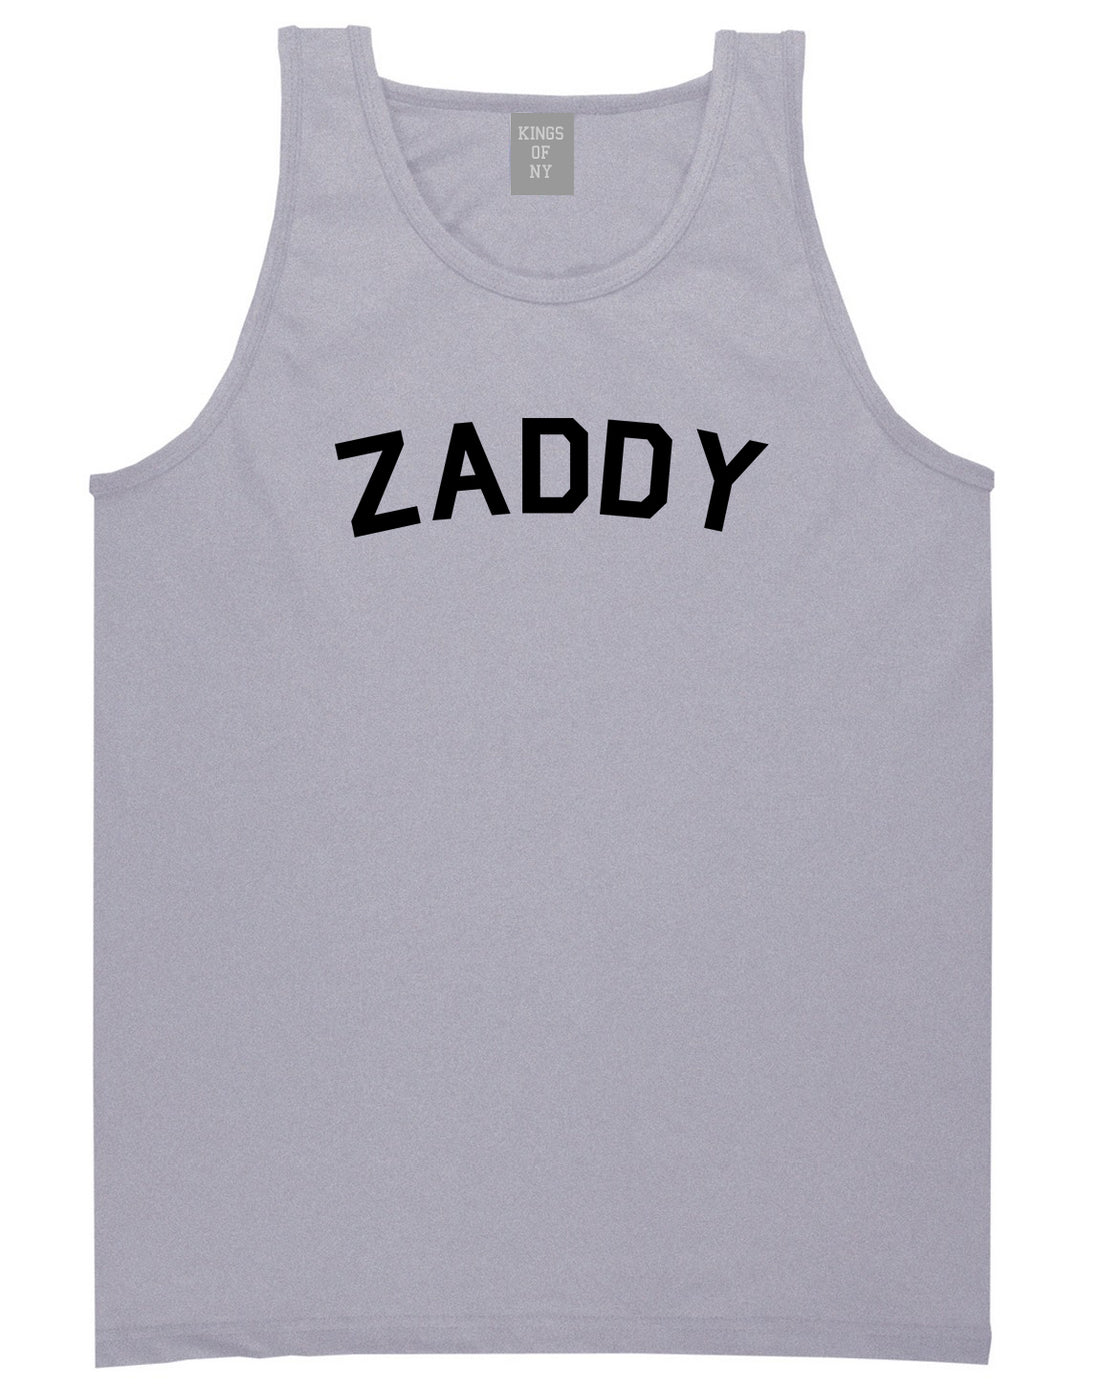 Zaddy Mens Tank Top Shirt Grey